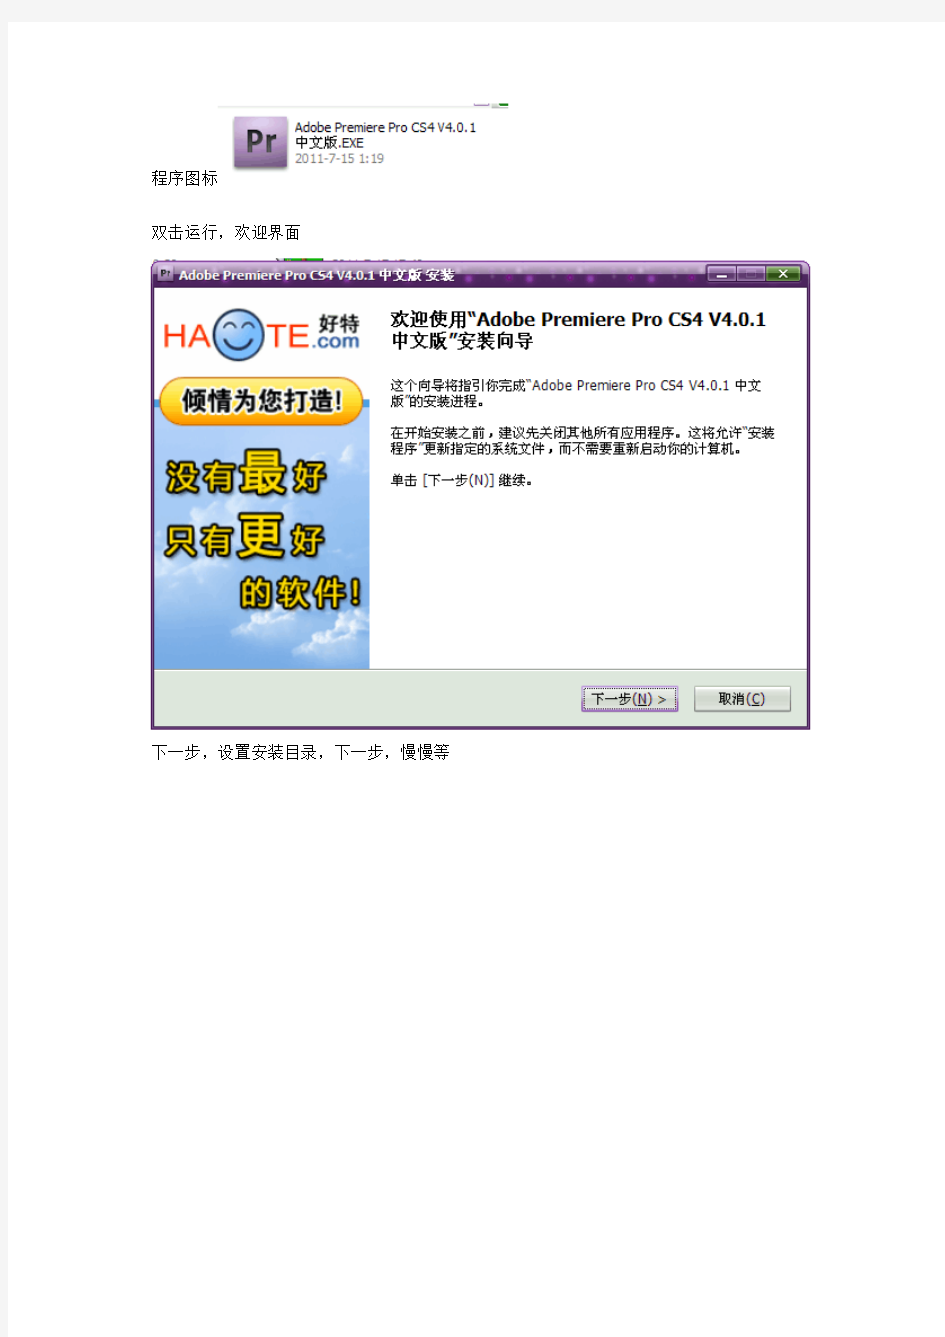 Adobe Premiere Pro CS4 V4.0.1中文版安装说明